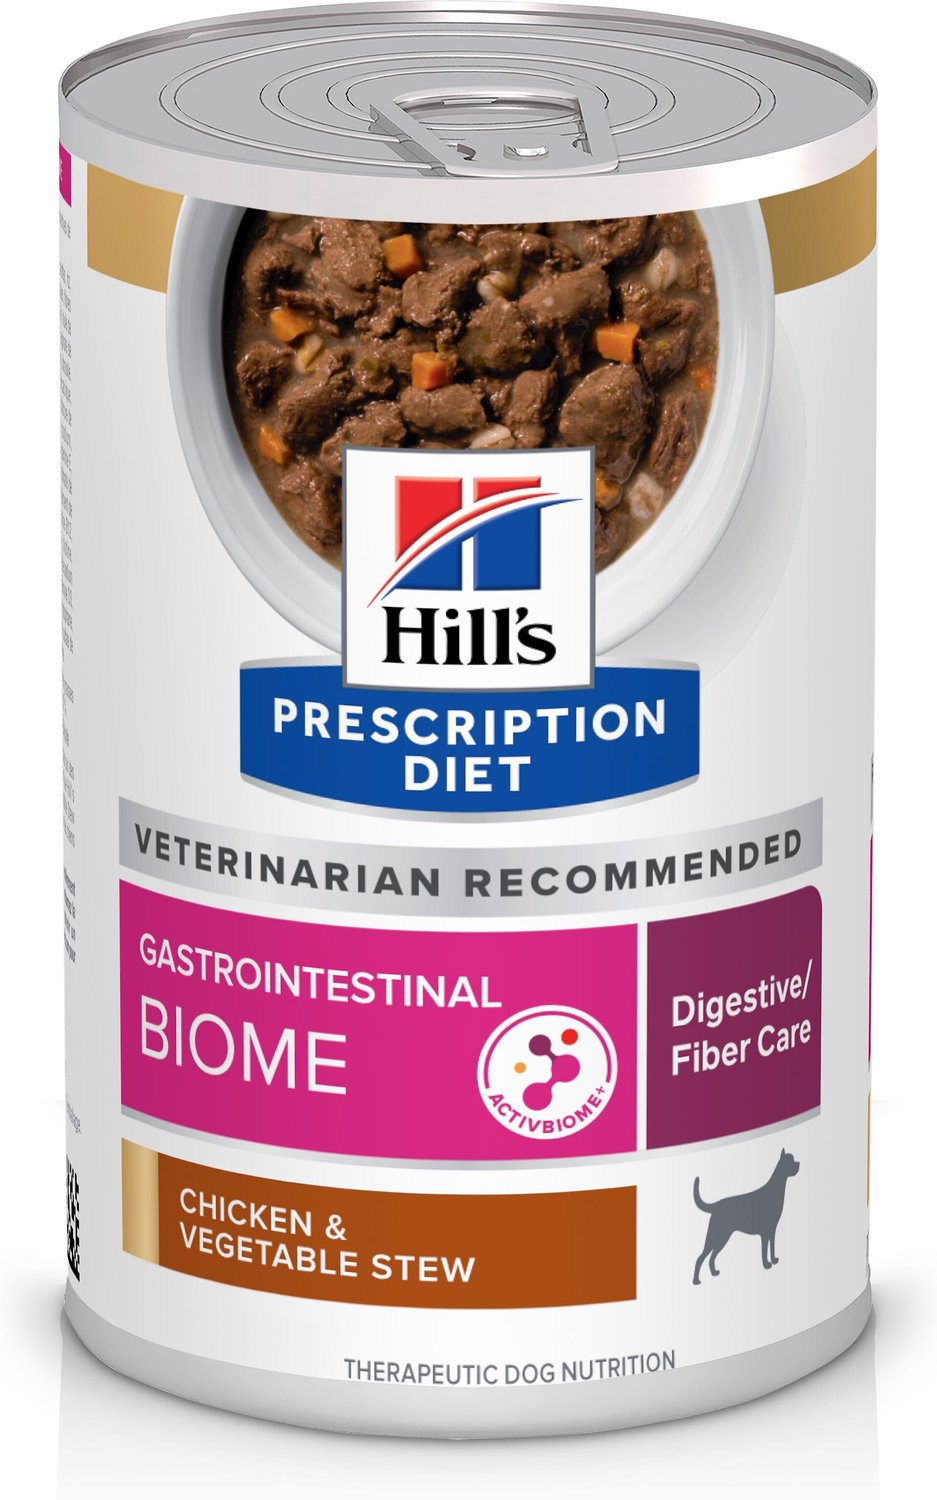 hills digestive care dog food